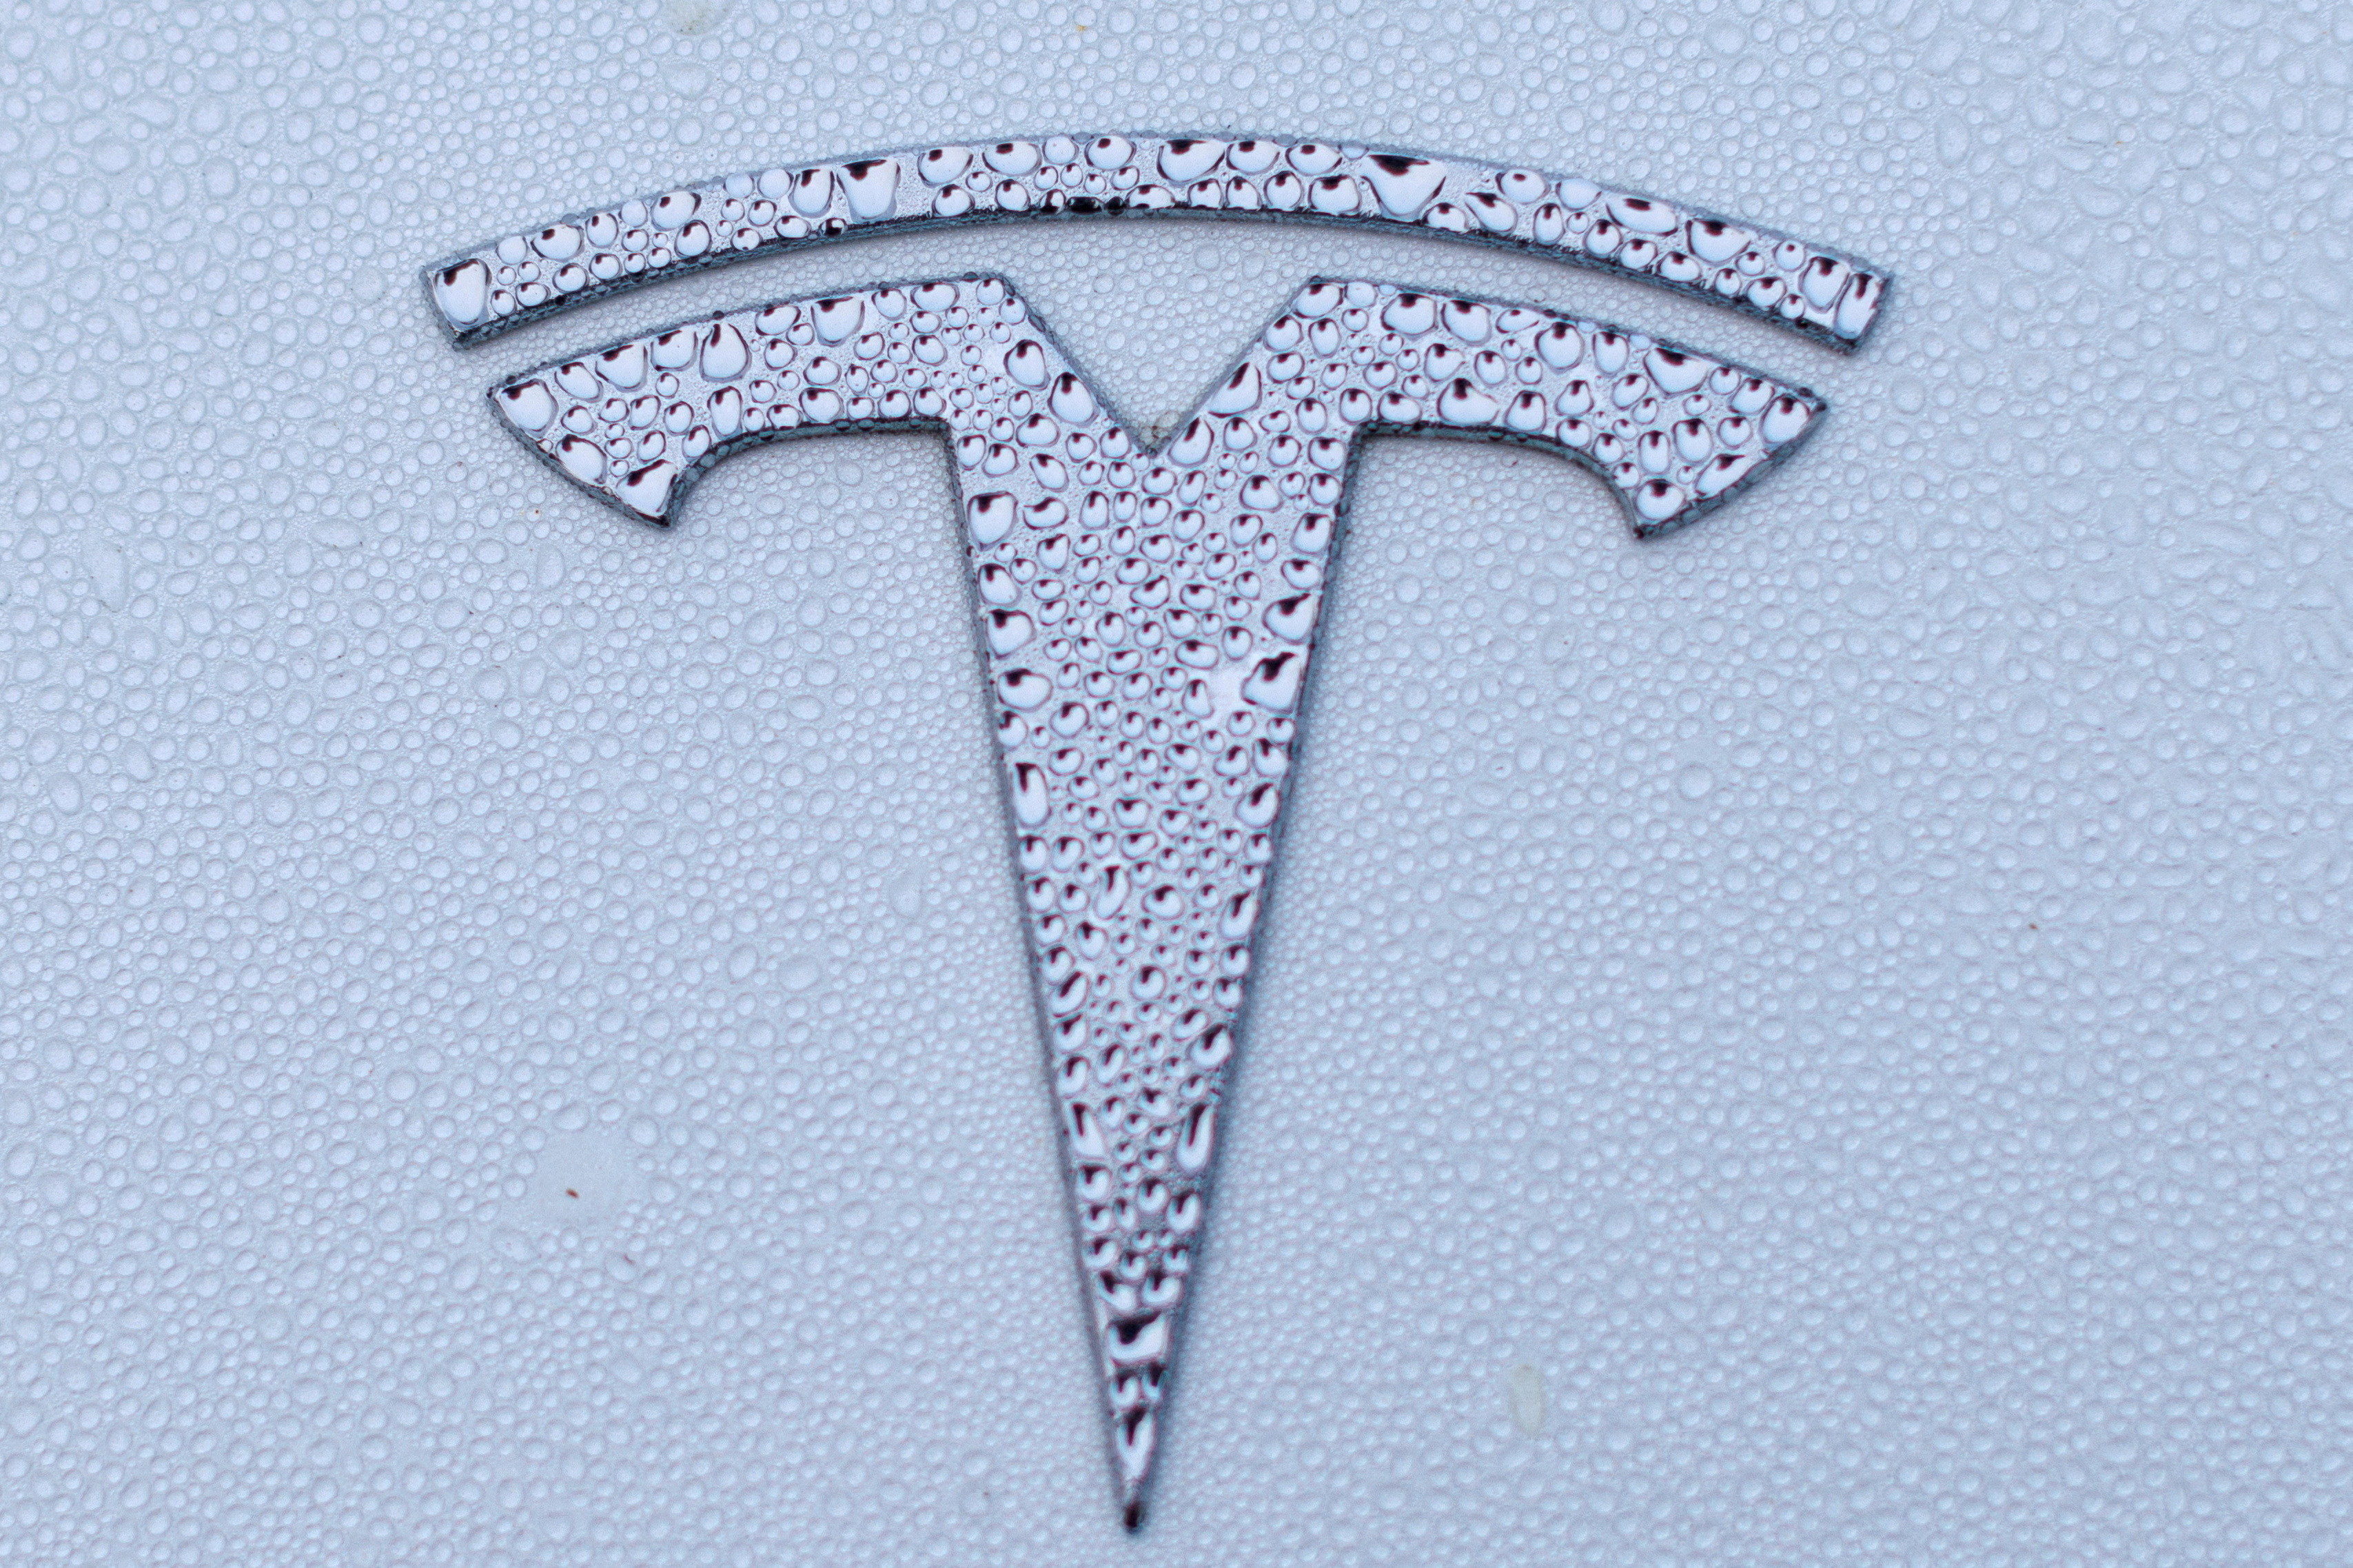 Tesla logo shown on Model Y vehicle in California